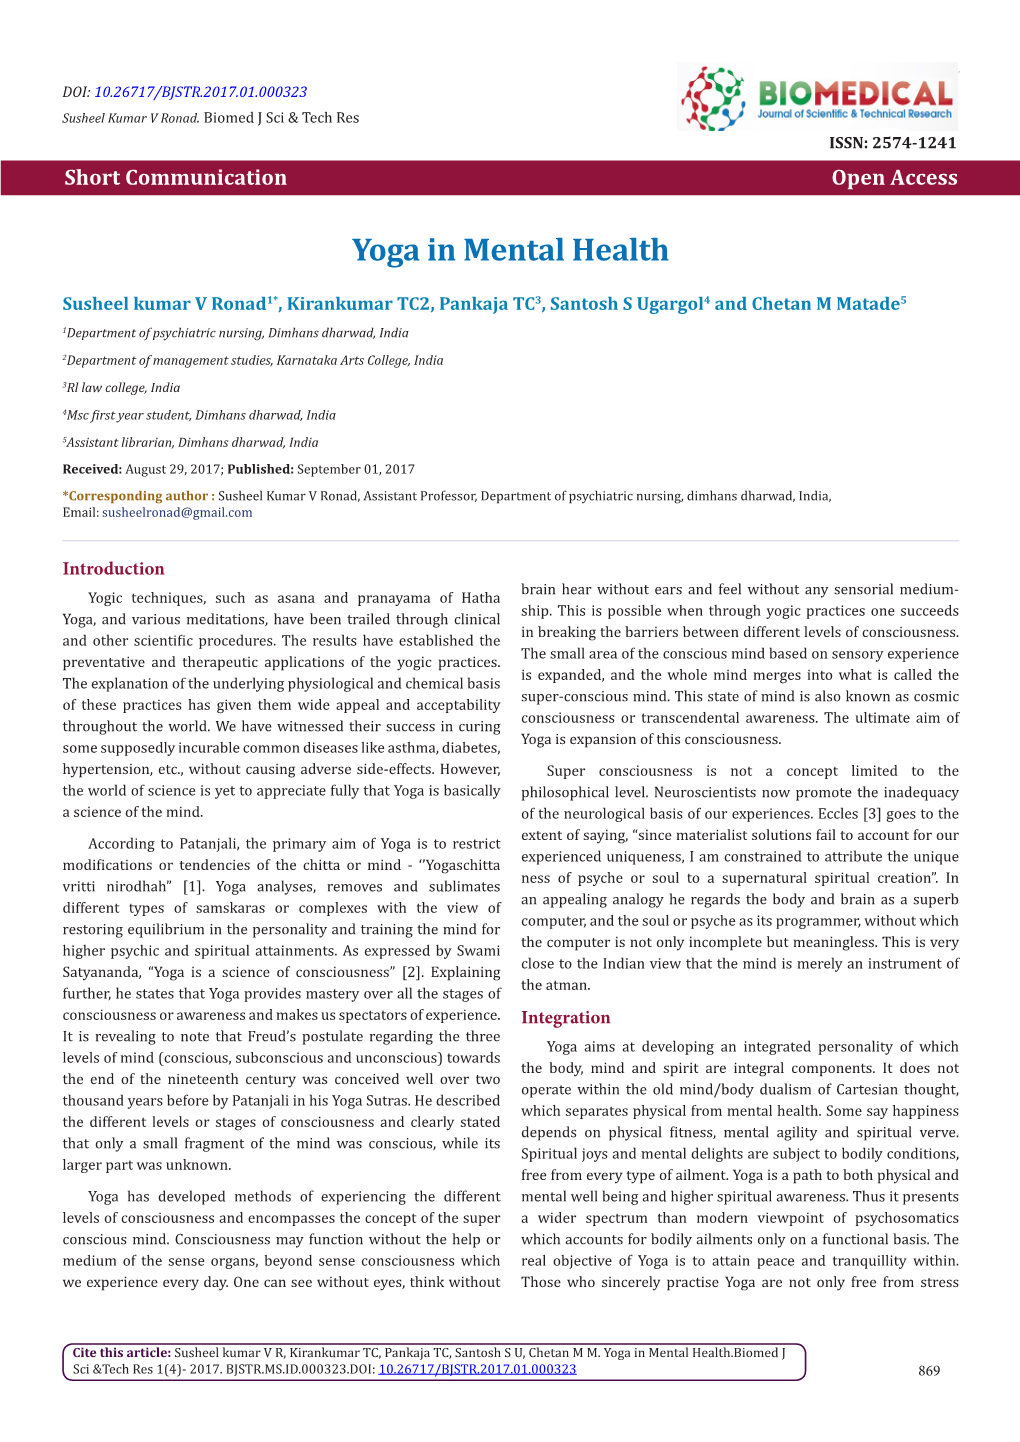 Yoga in Mental Health